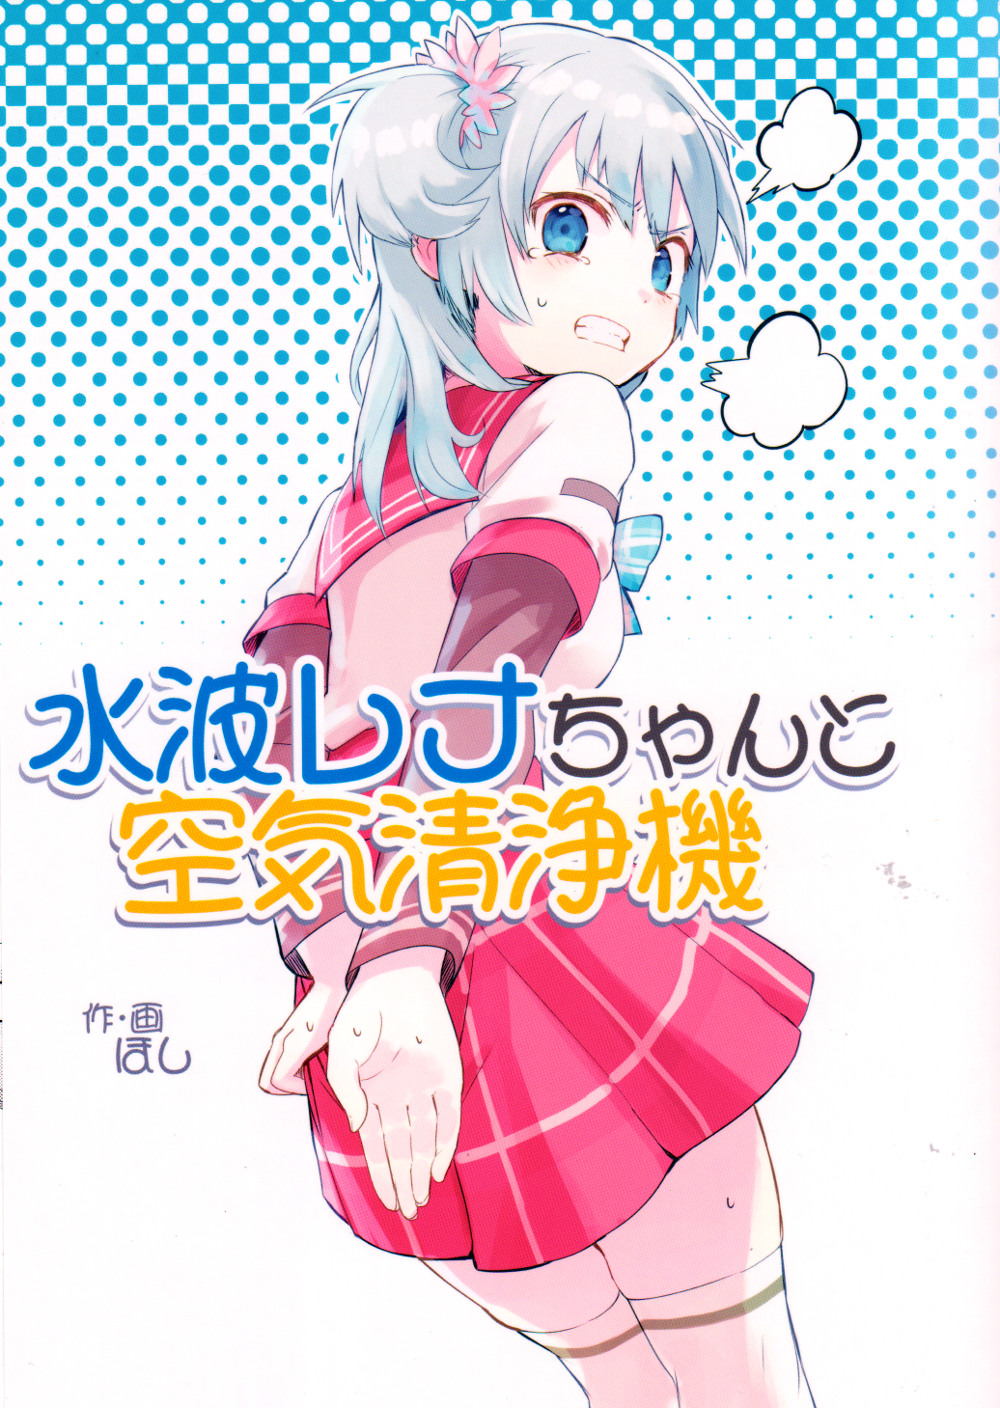 Magia Record: Mahou Shoujo Madoka☆Magica Gaiden - MangaDex